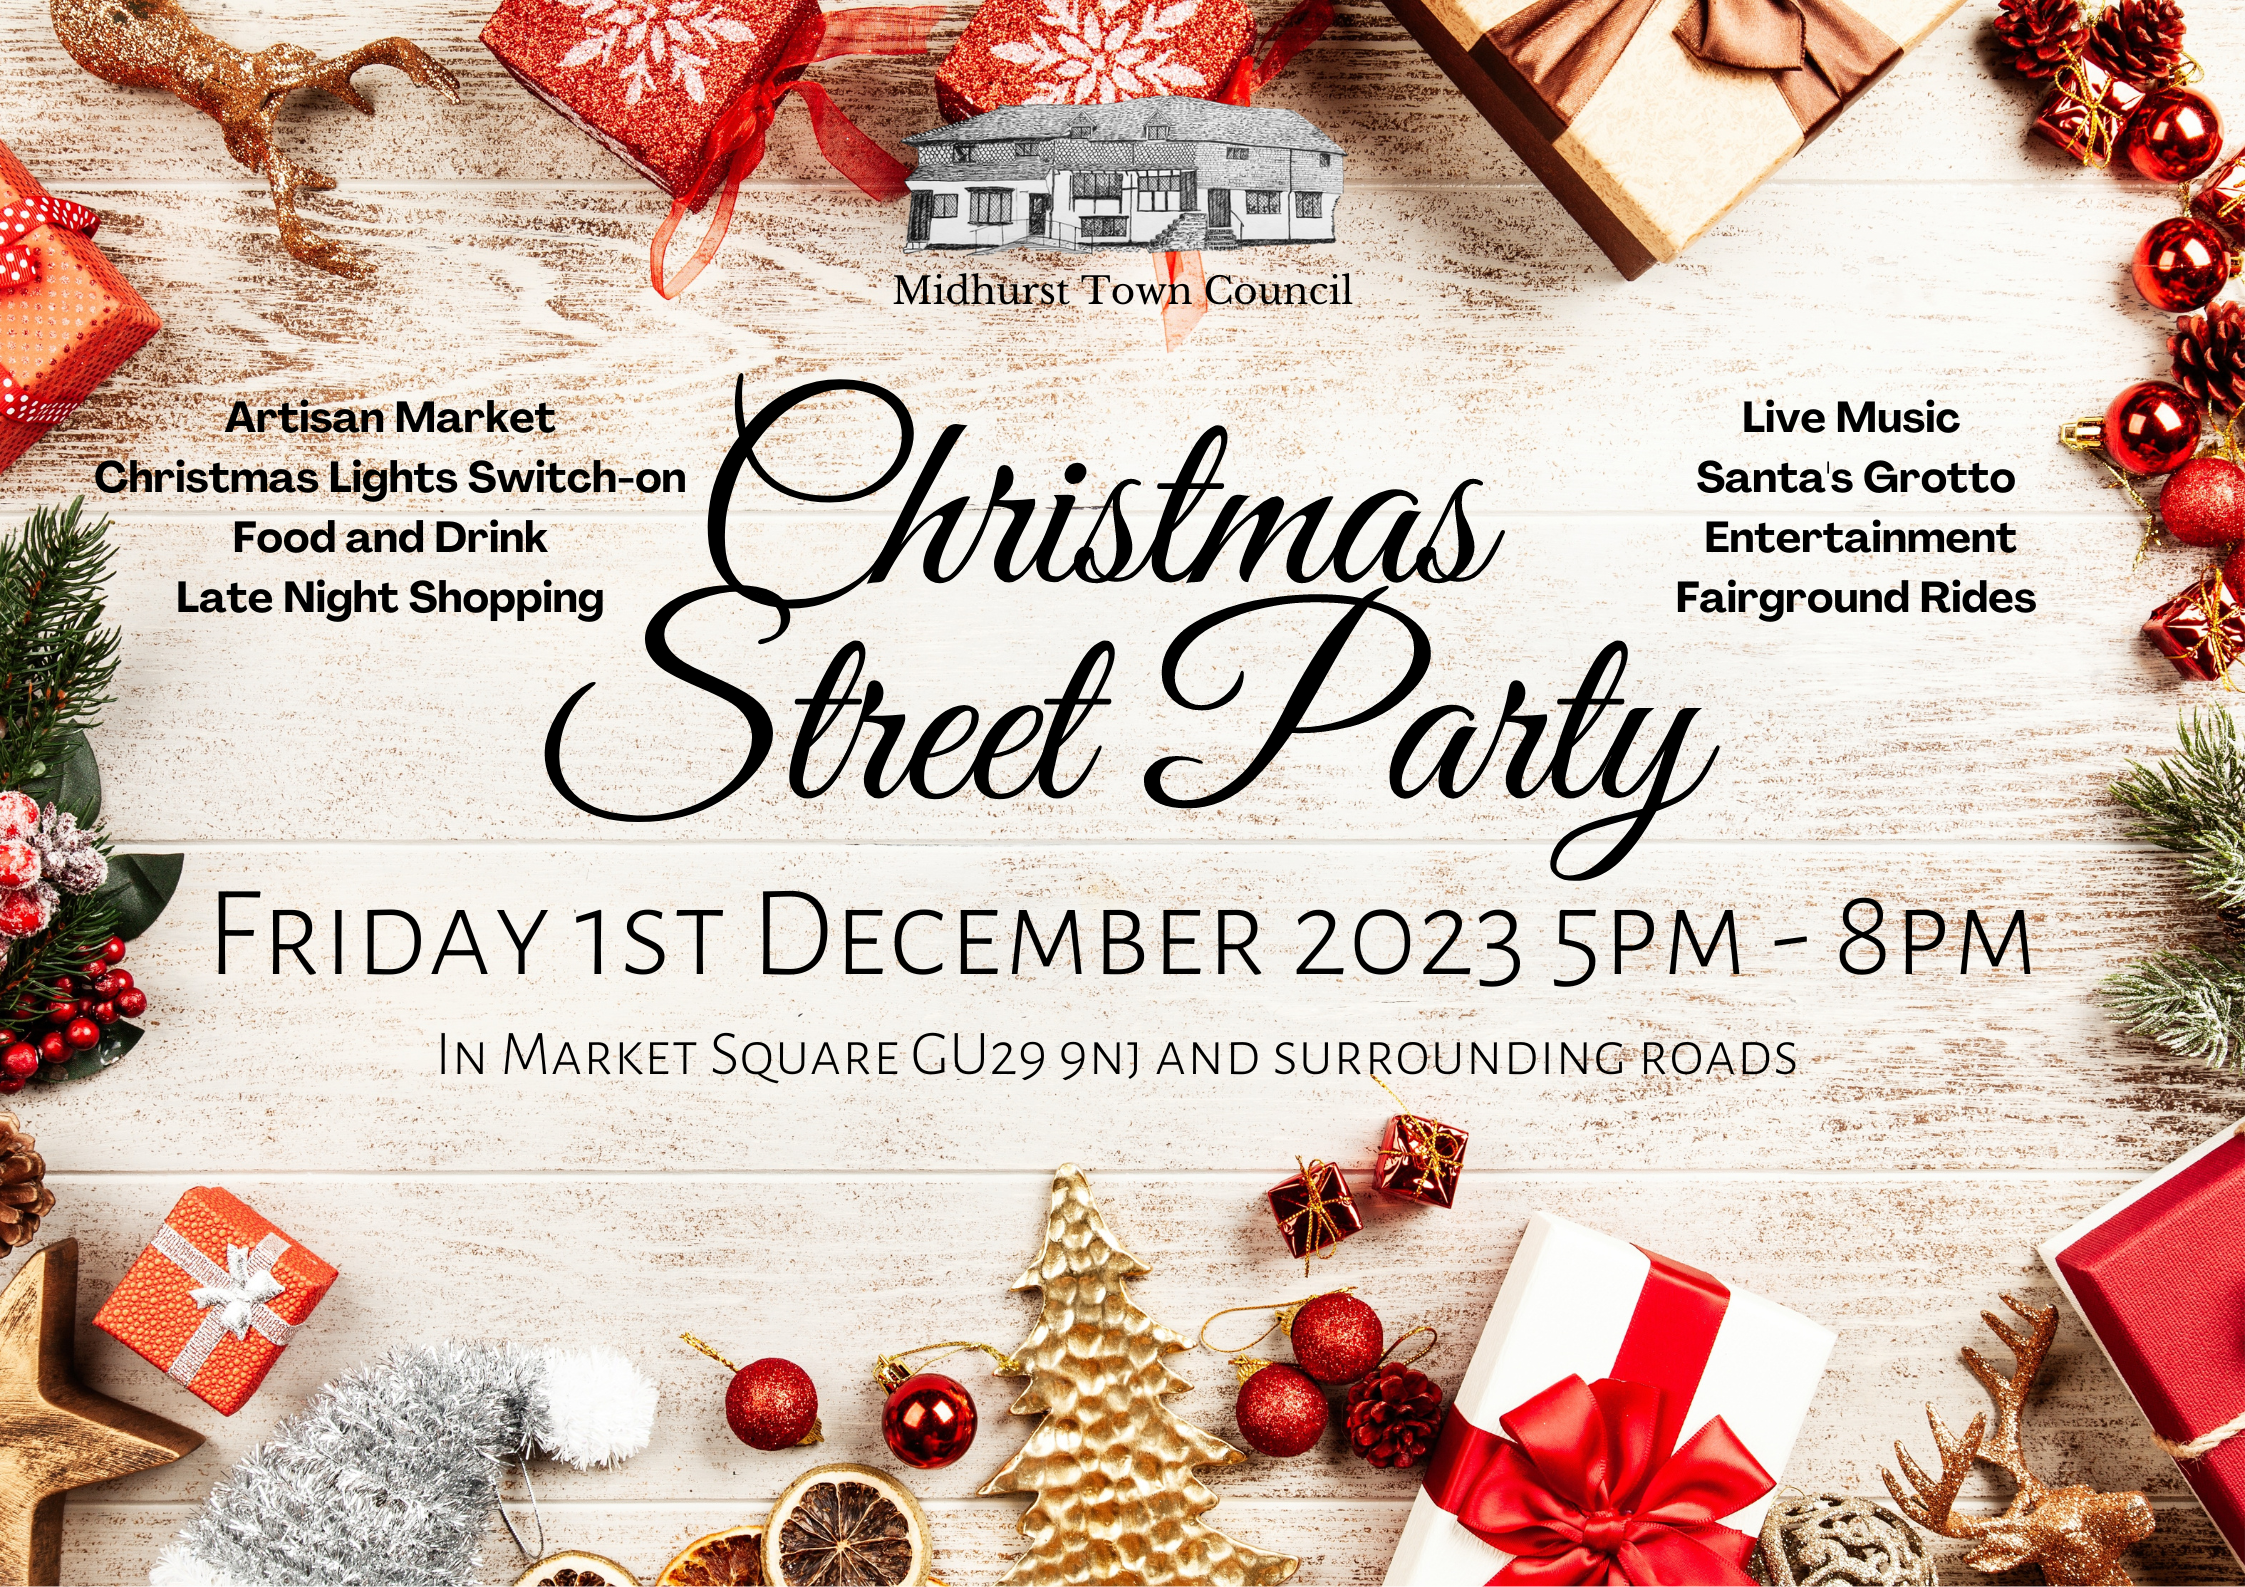 Midhurst Christmas Street Party!